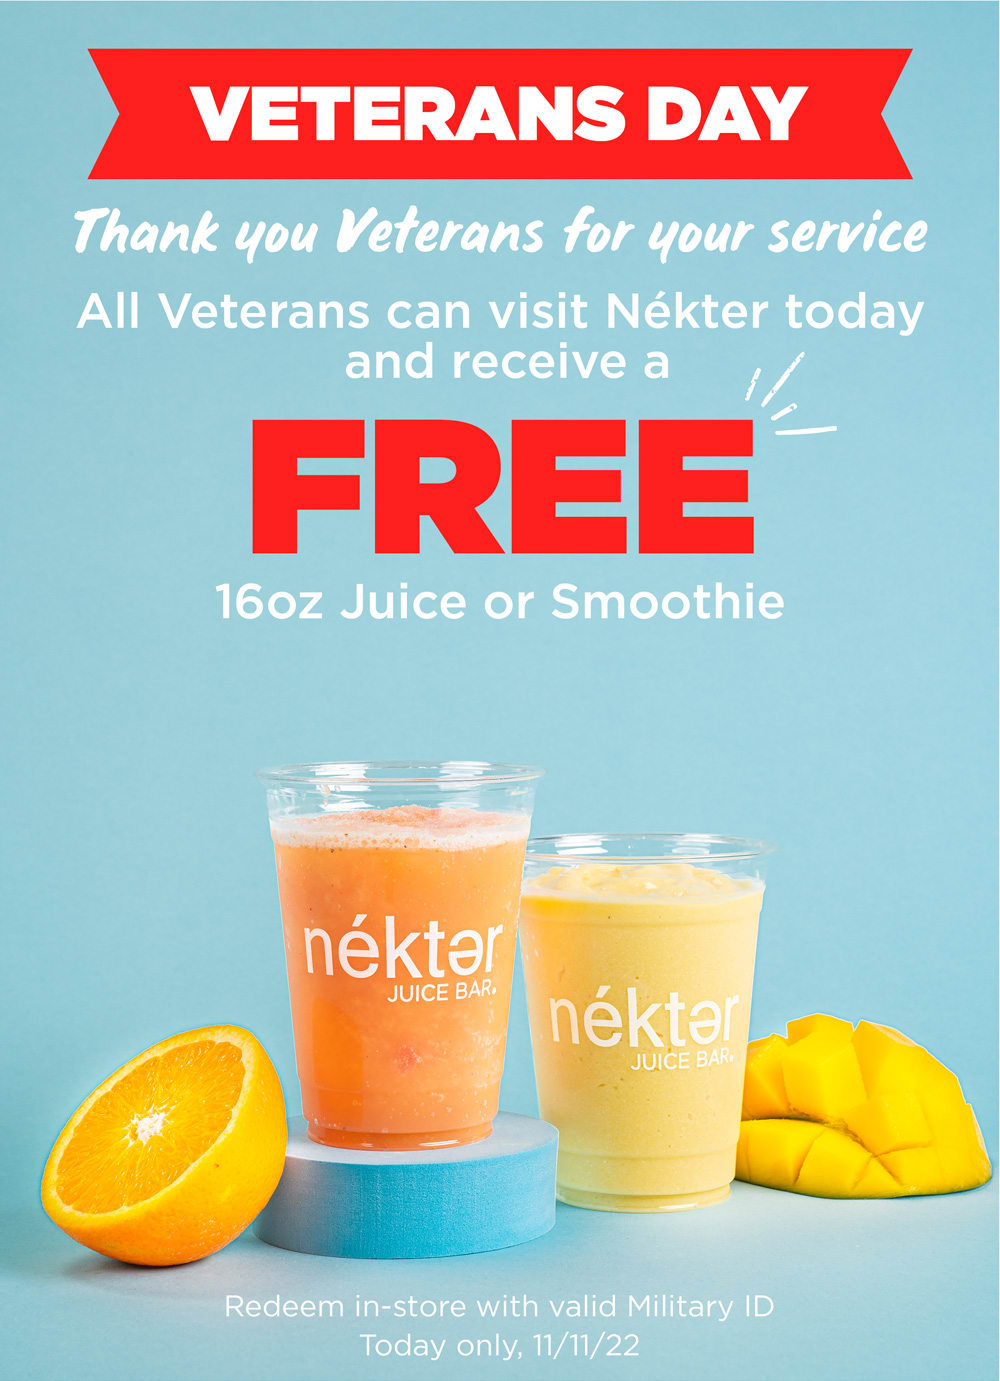 Free 16oz Juice or Smoothie for Veterans! Nekter Juice Bar